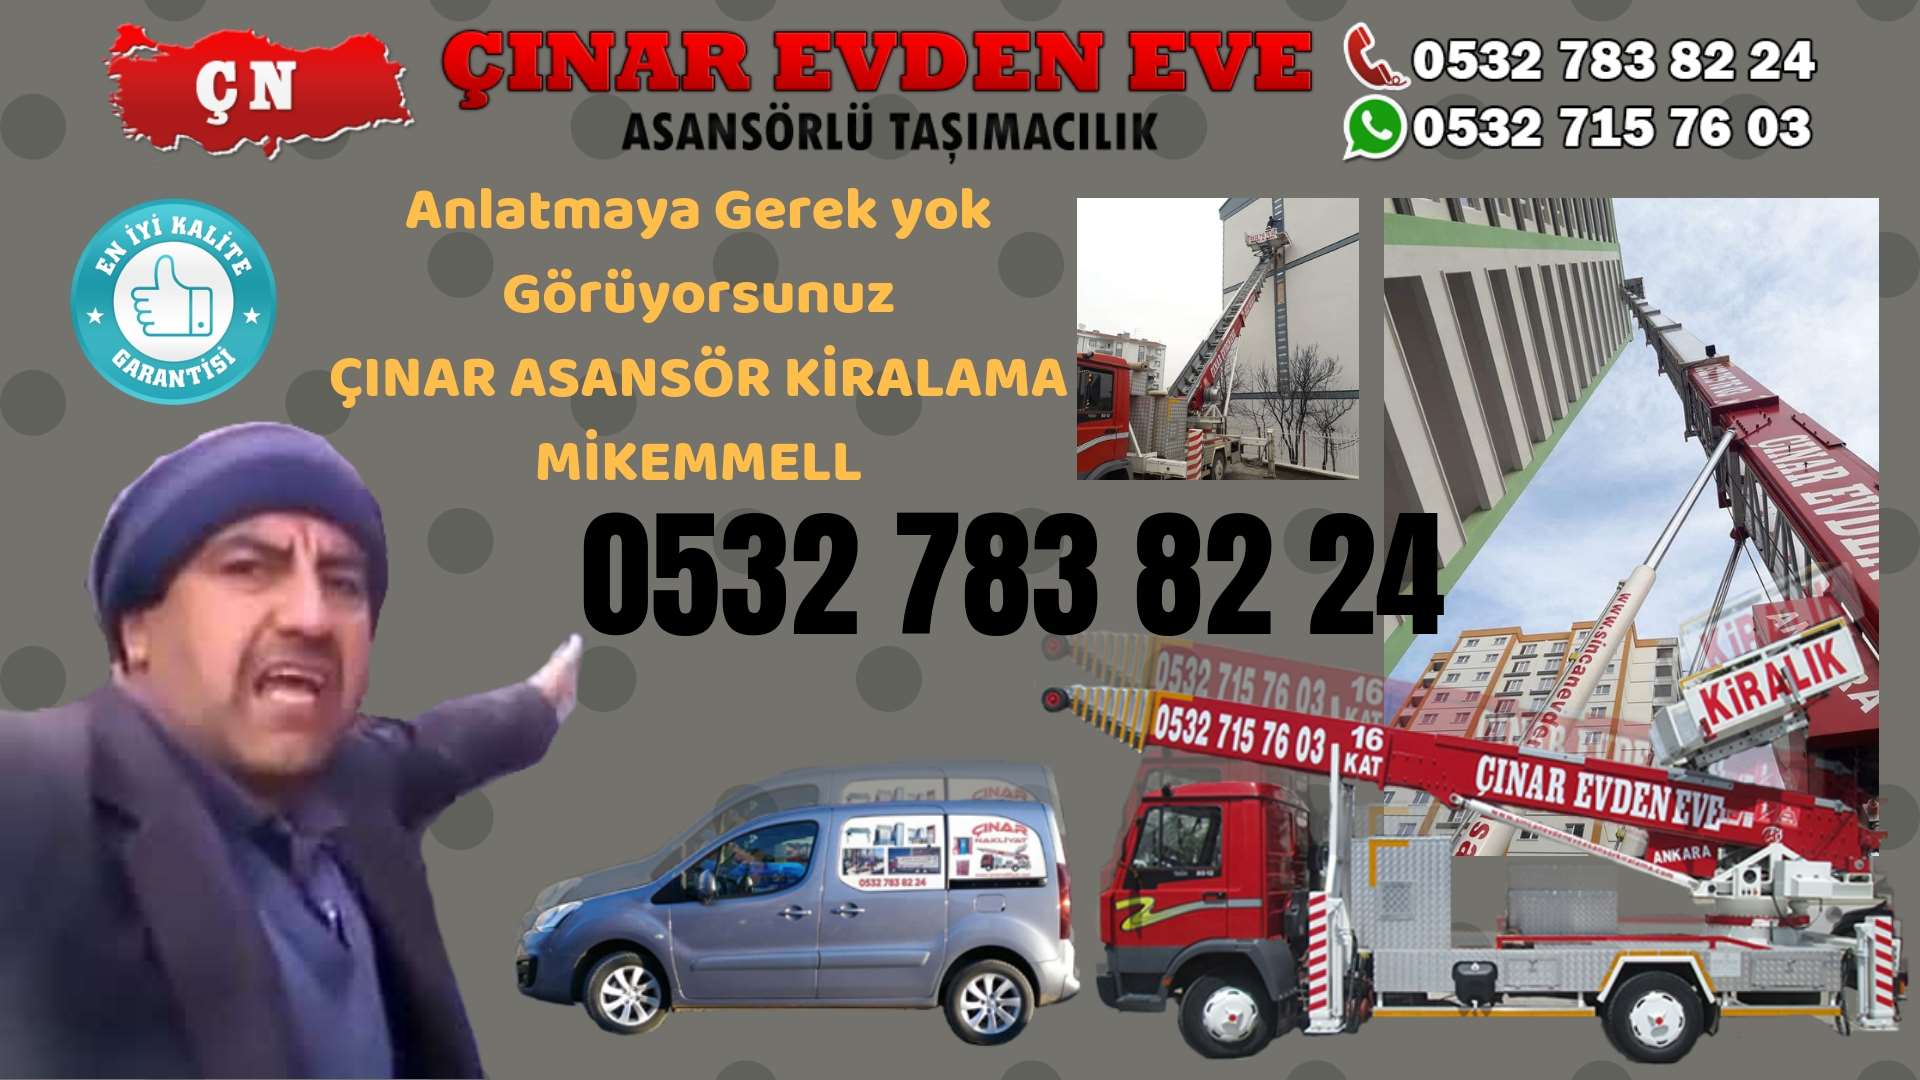 Ankara Ostim Ankara asansör kiralama hizmeti sizlere başta kalite ve maddi acıdan tasarruf 0532 715 76 03